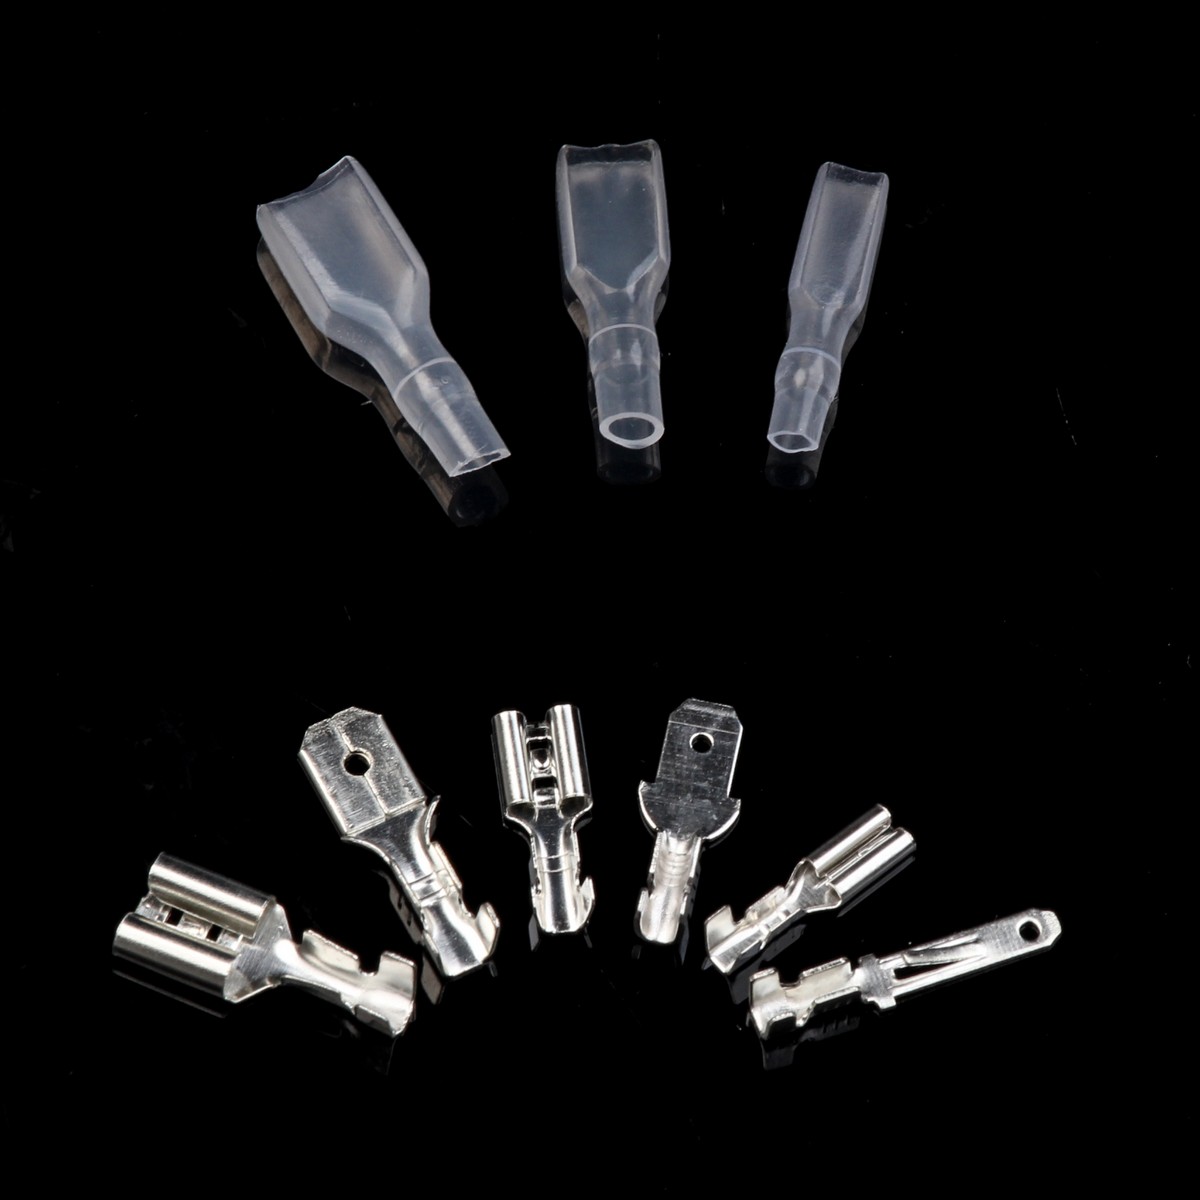 wire crimp connector types